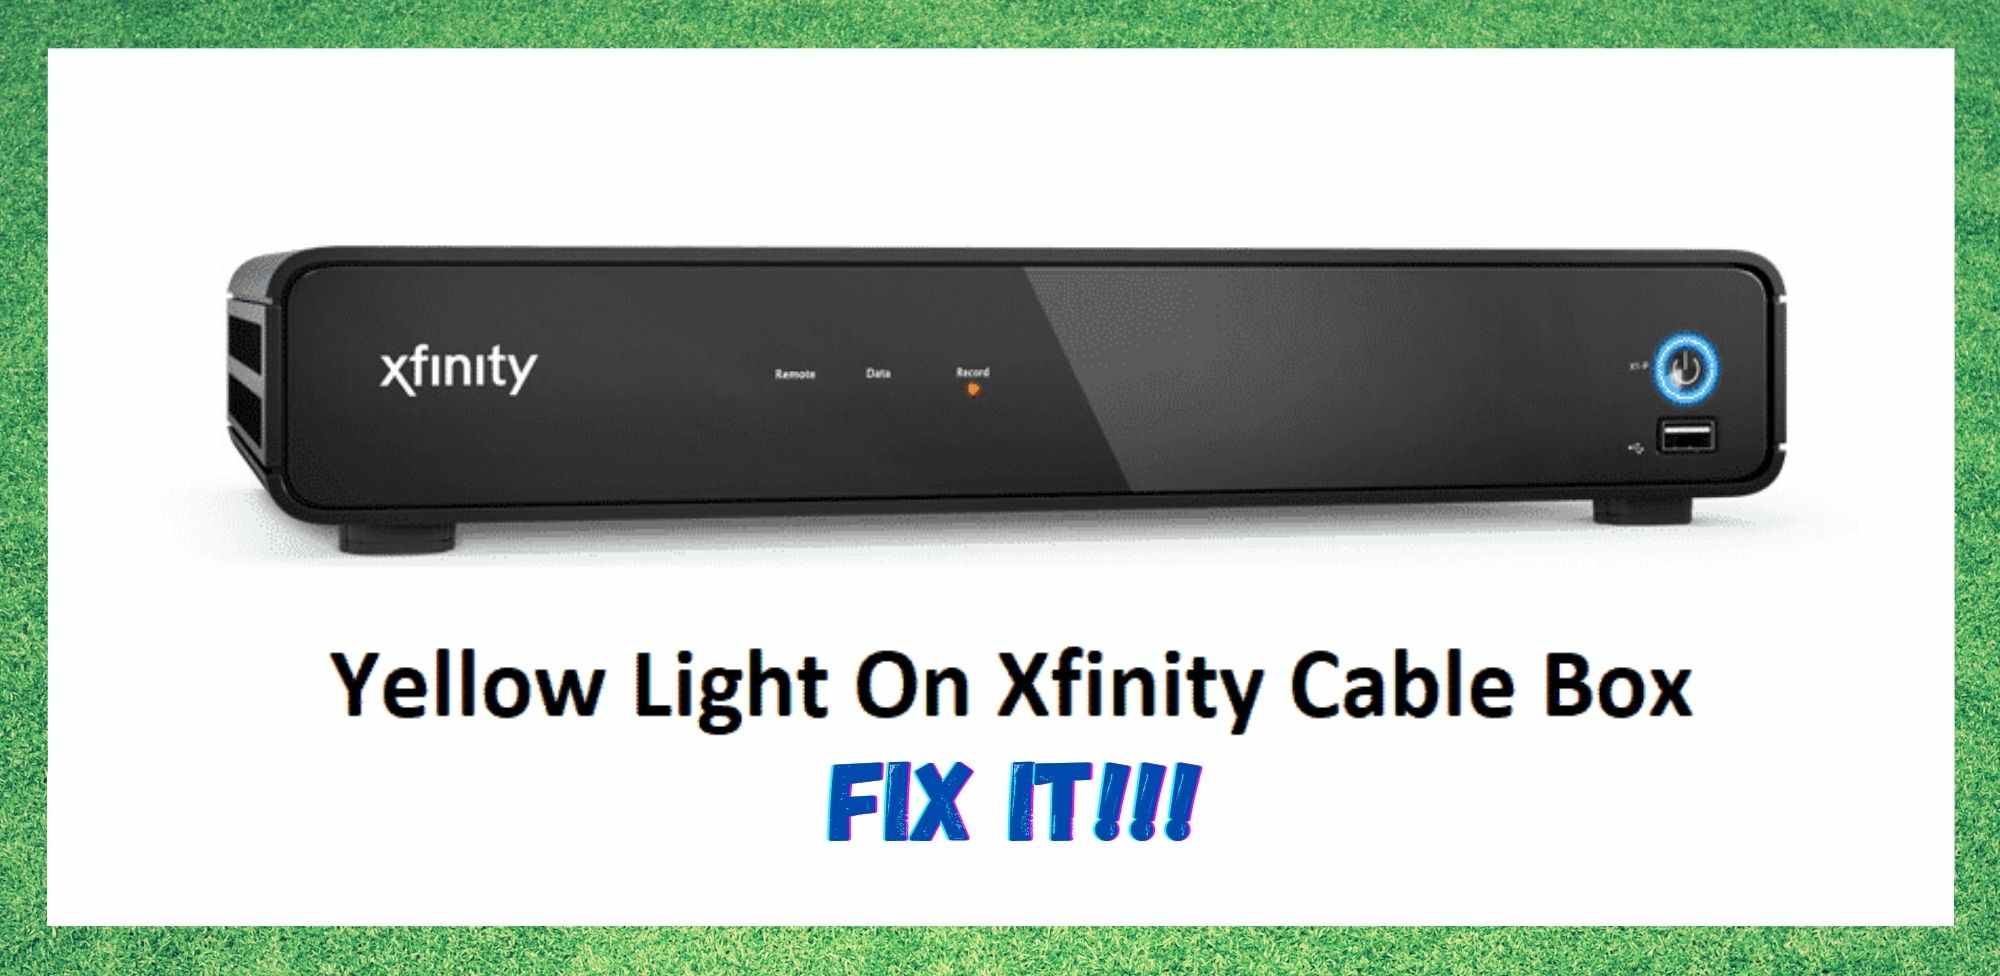 yellow light on xfinity cable box